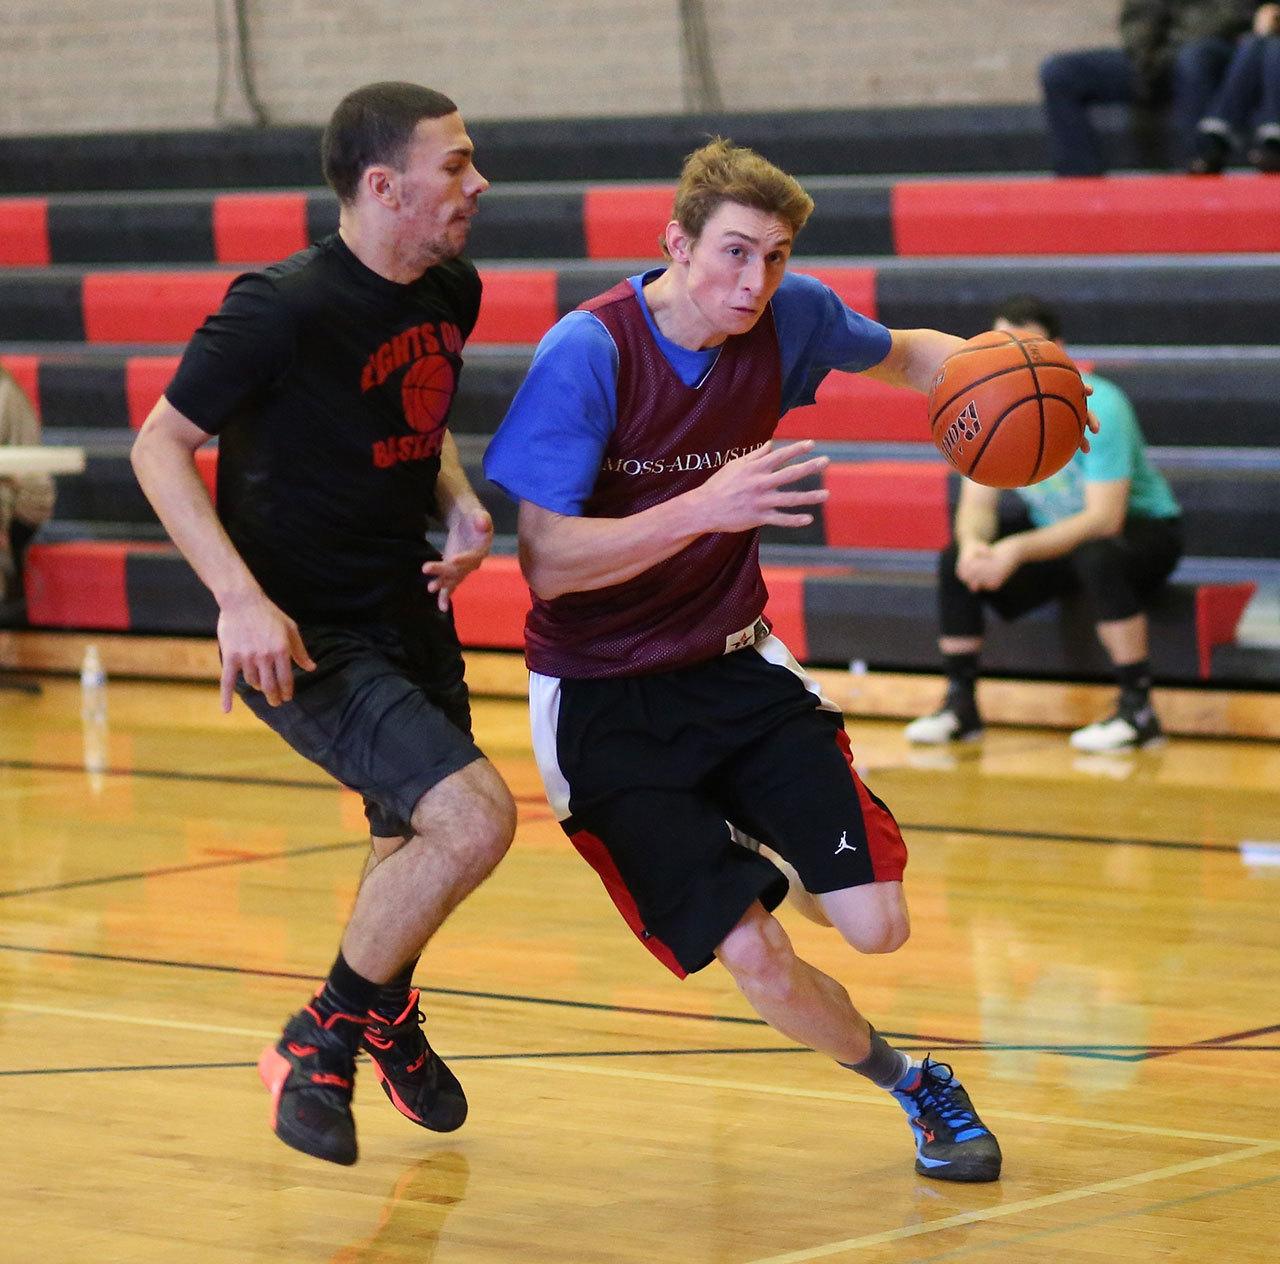 Former Oak Harbor High School player Chris Hailer takes the ball to the hoop. (Photo by John Fisken)